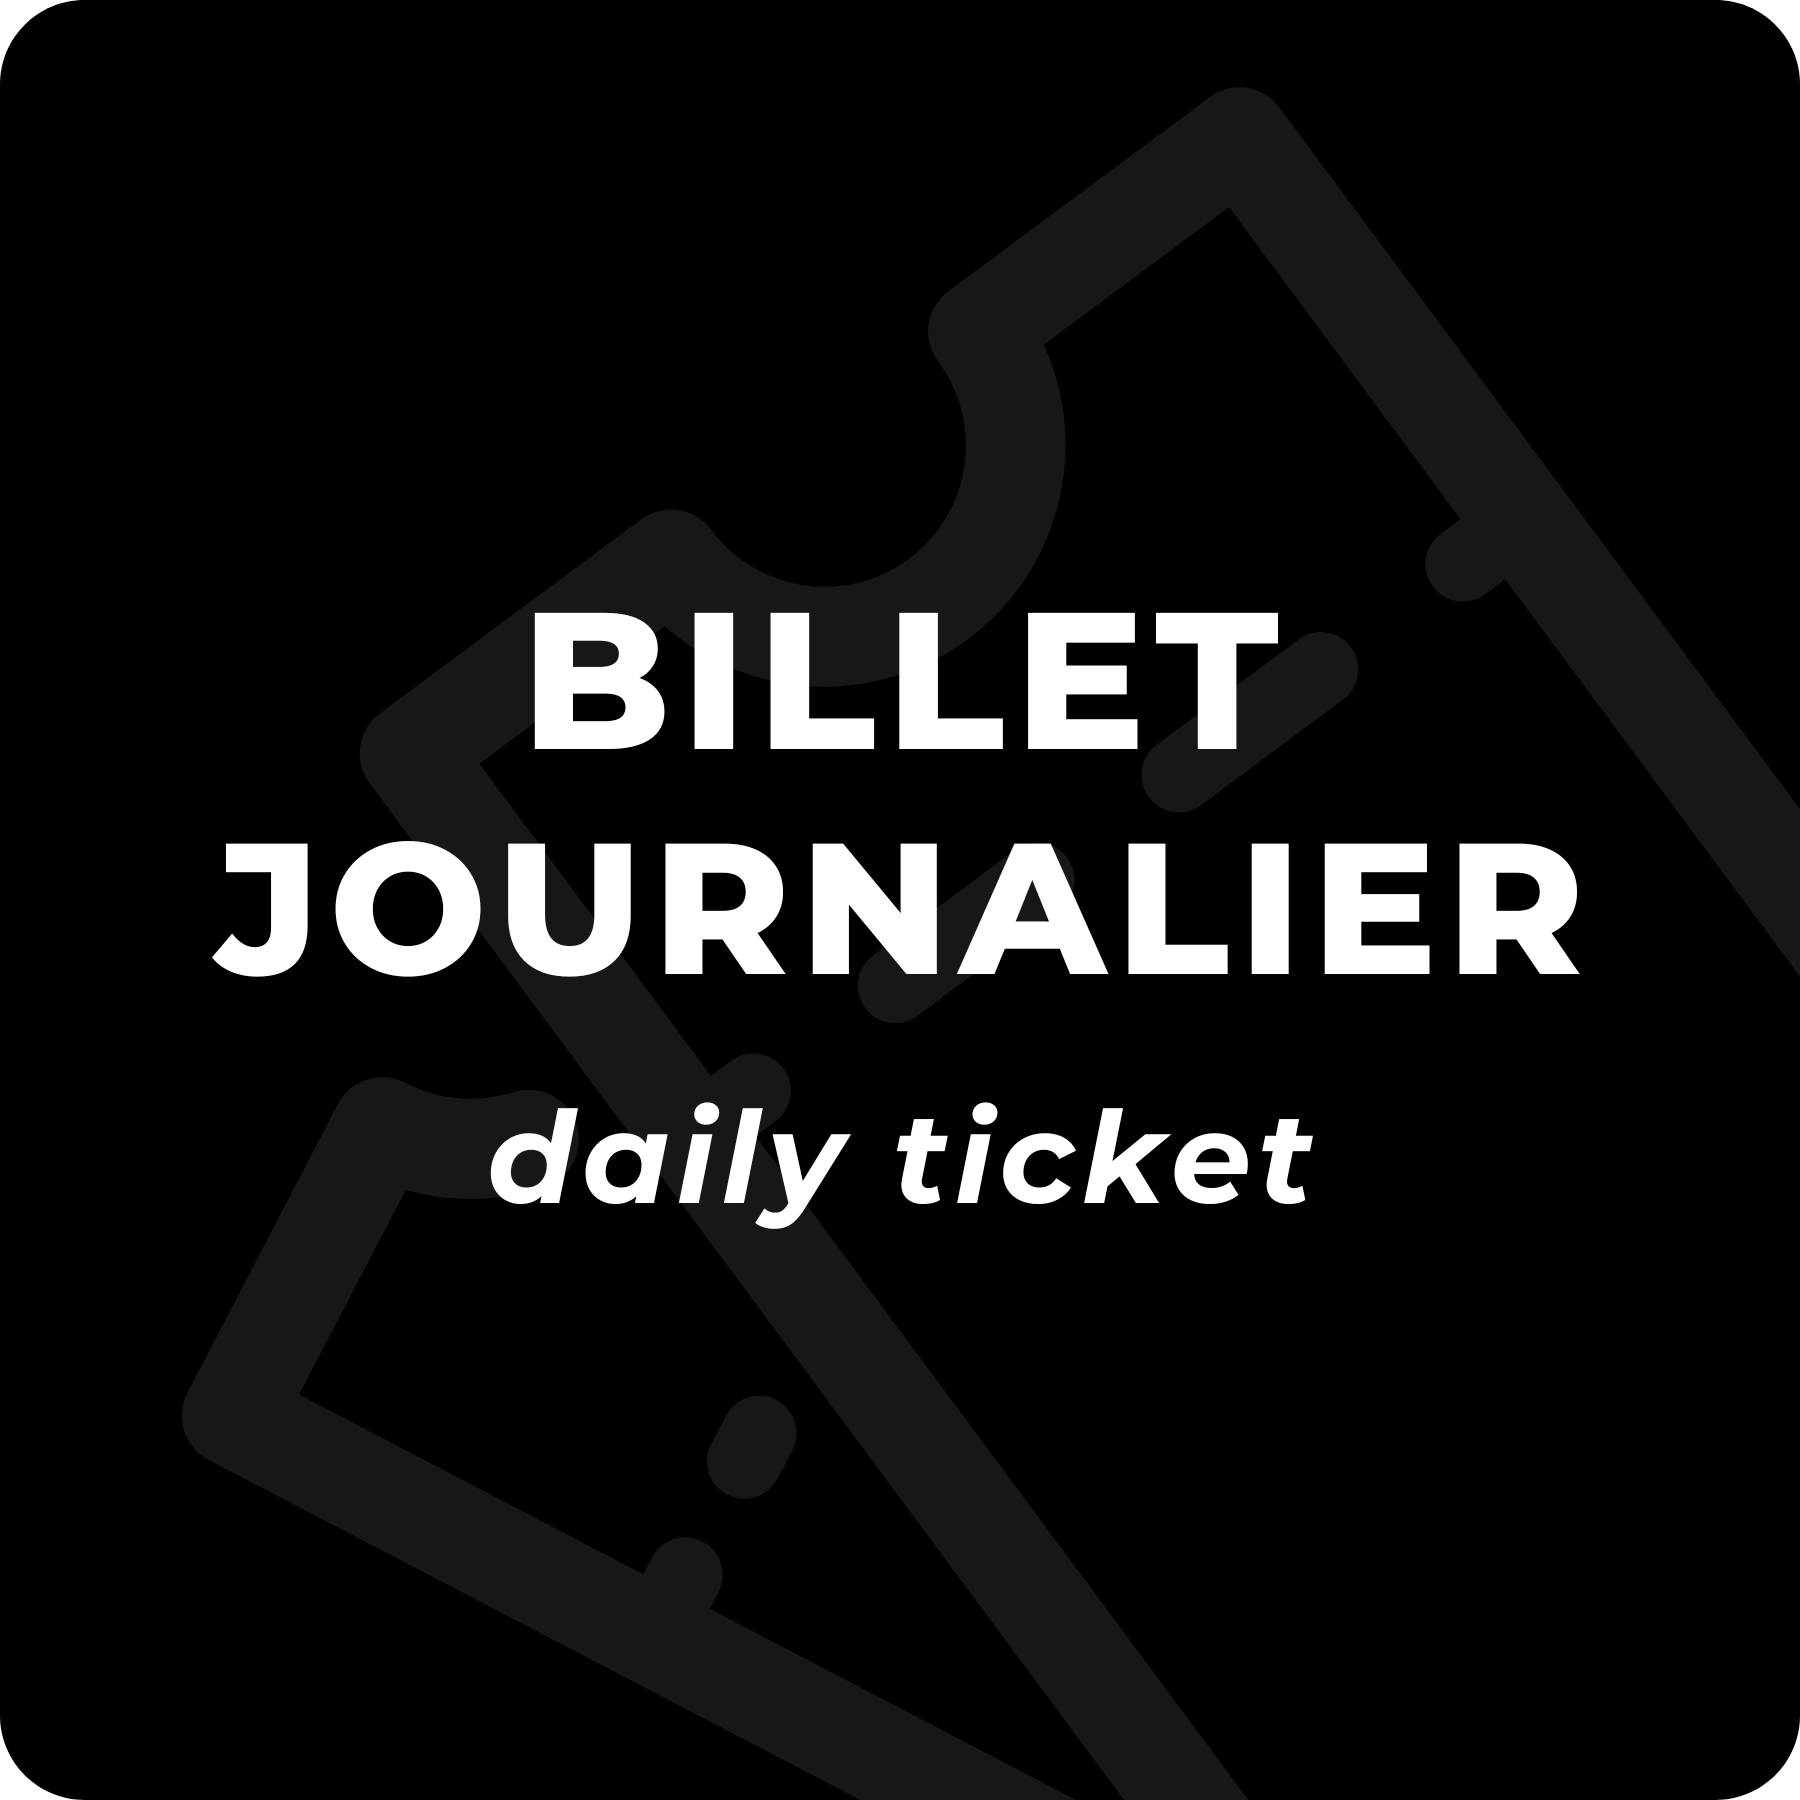 BILLET JOURNALIER